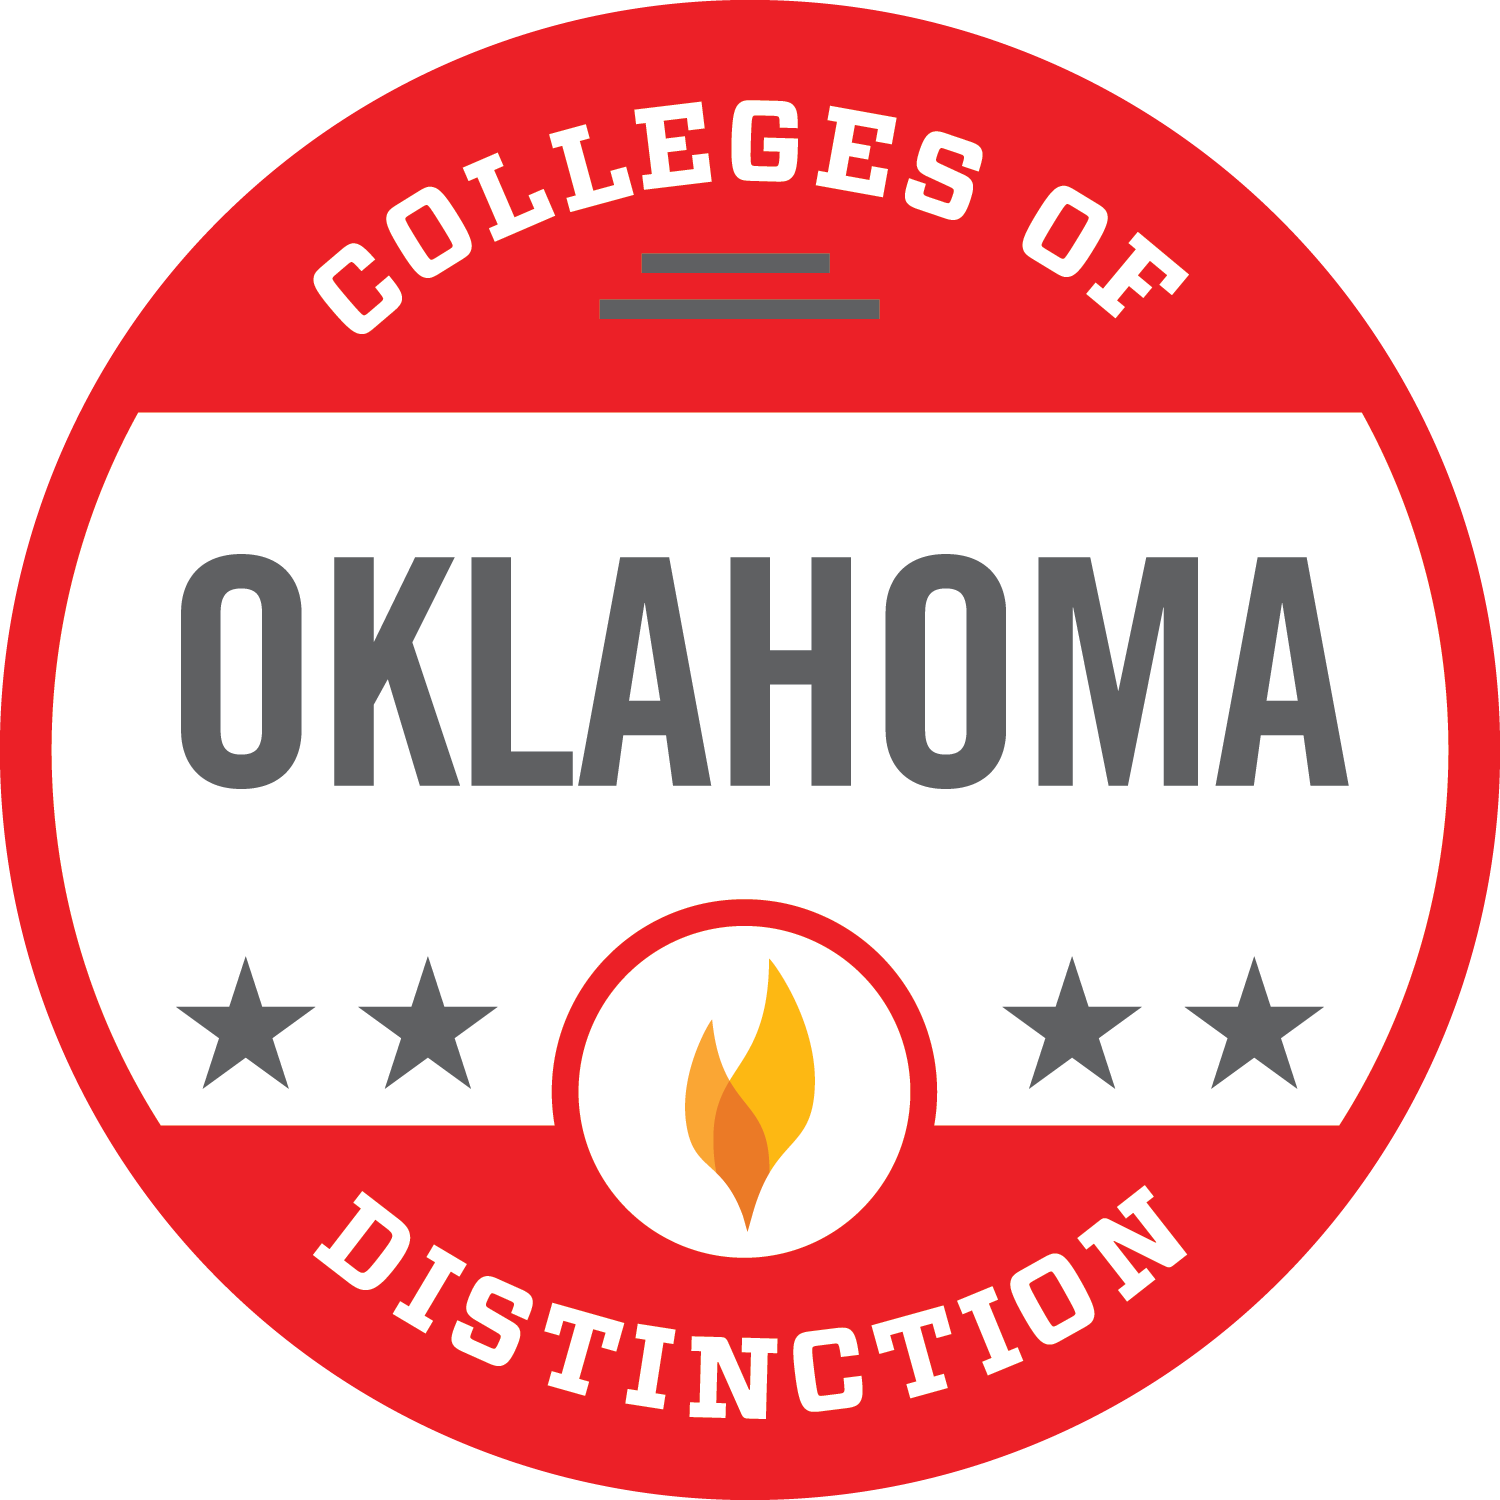 Oklahoma College of Distinction